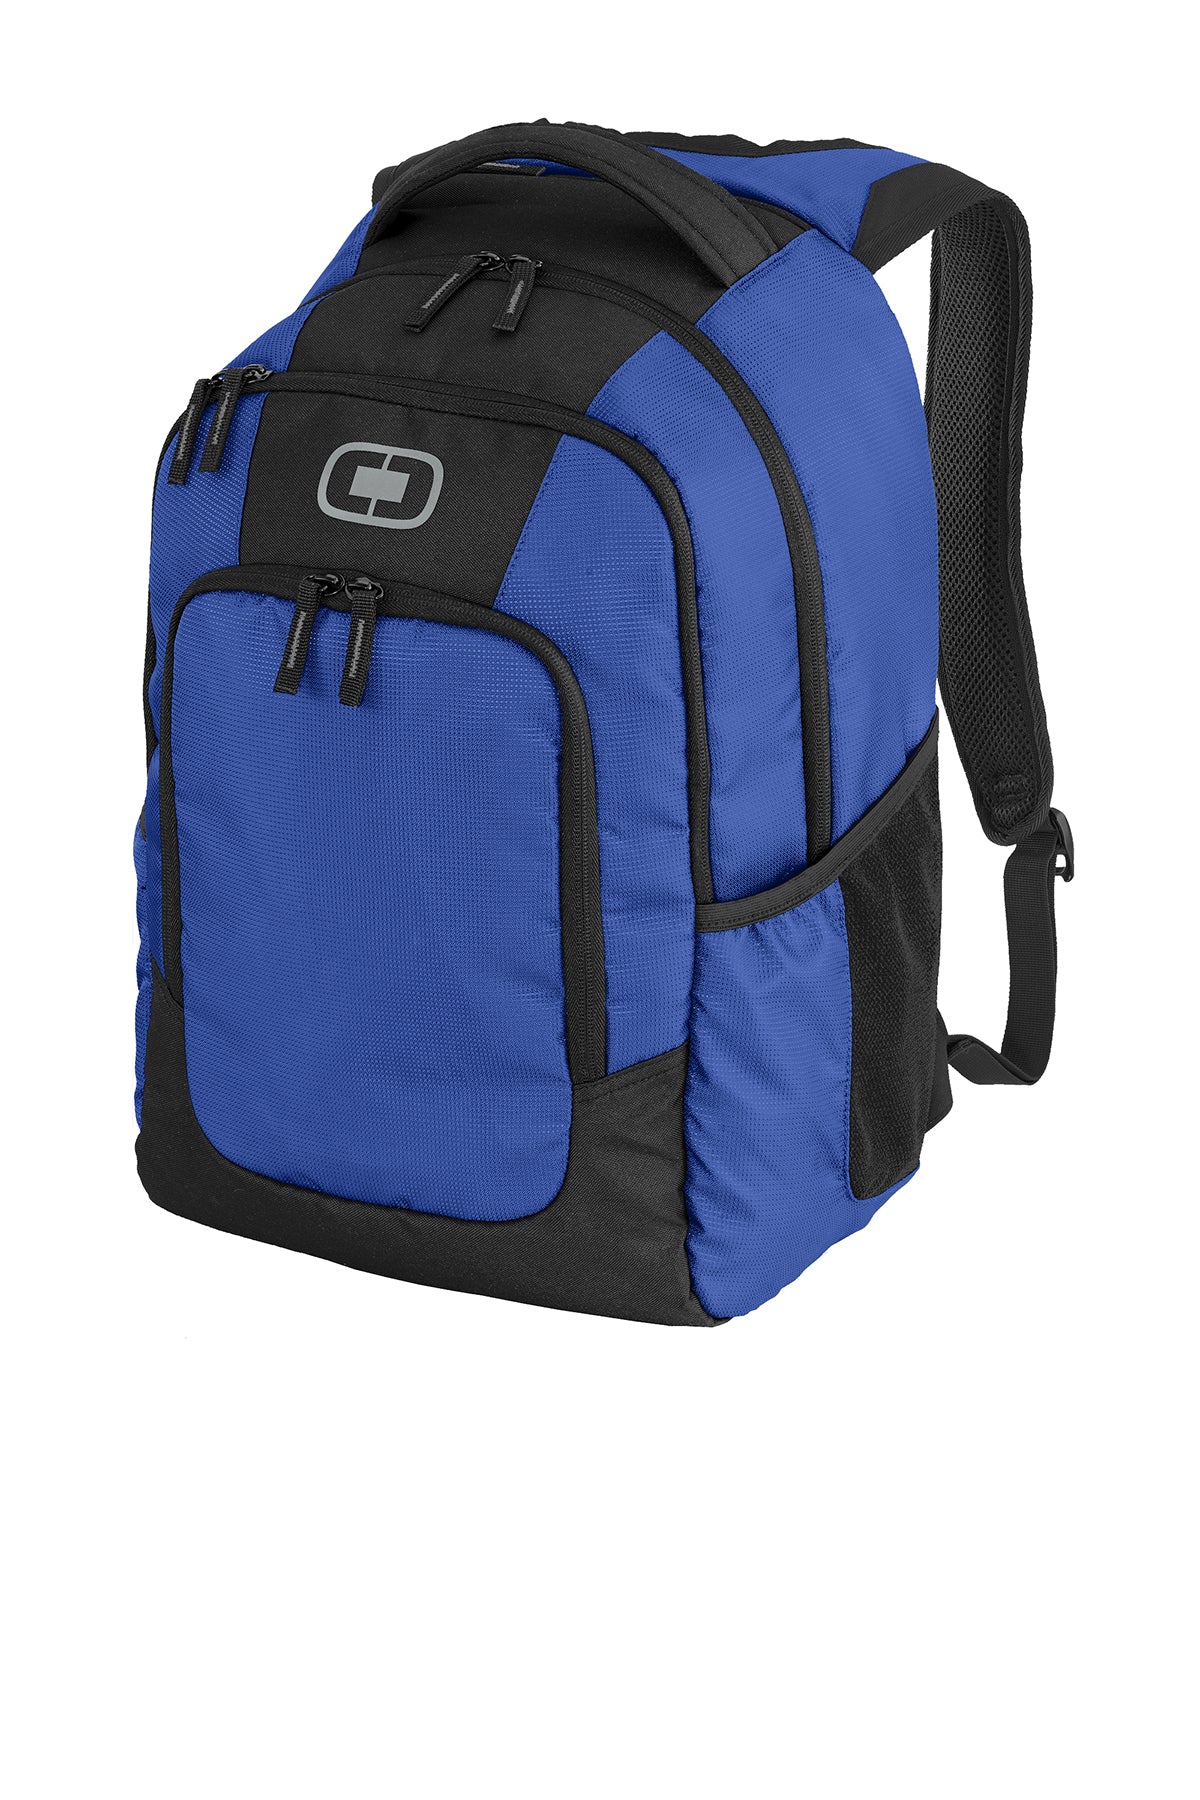 Sample OGIO Backpack